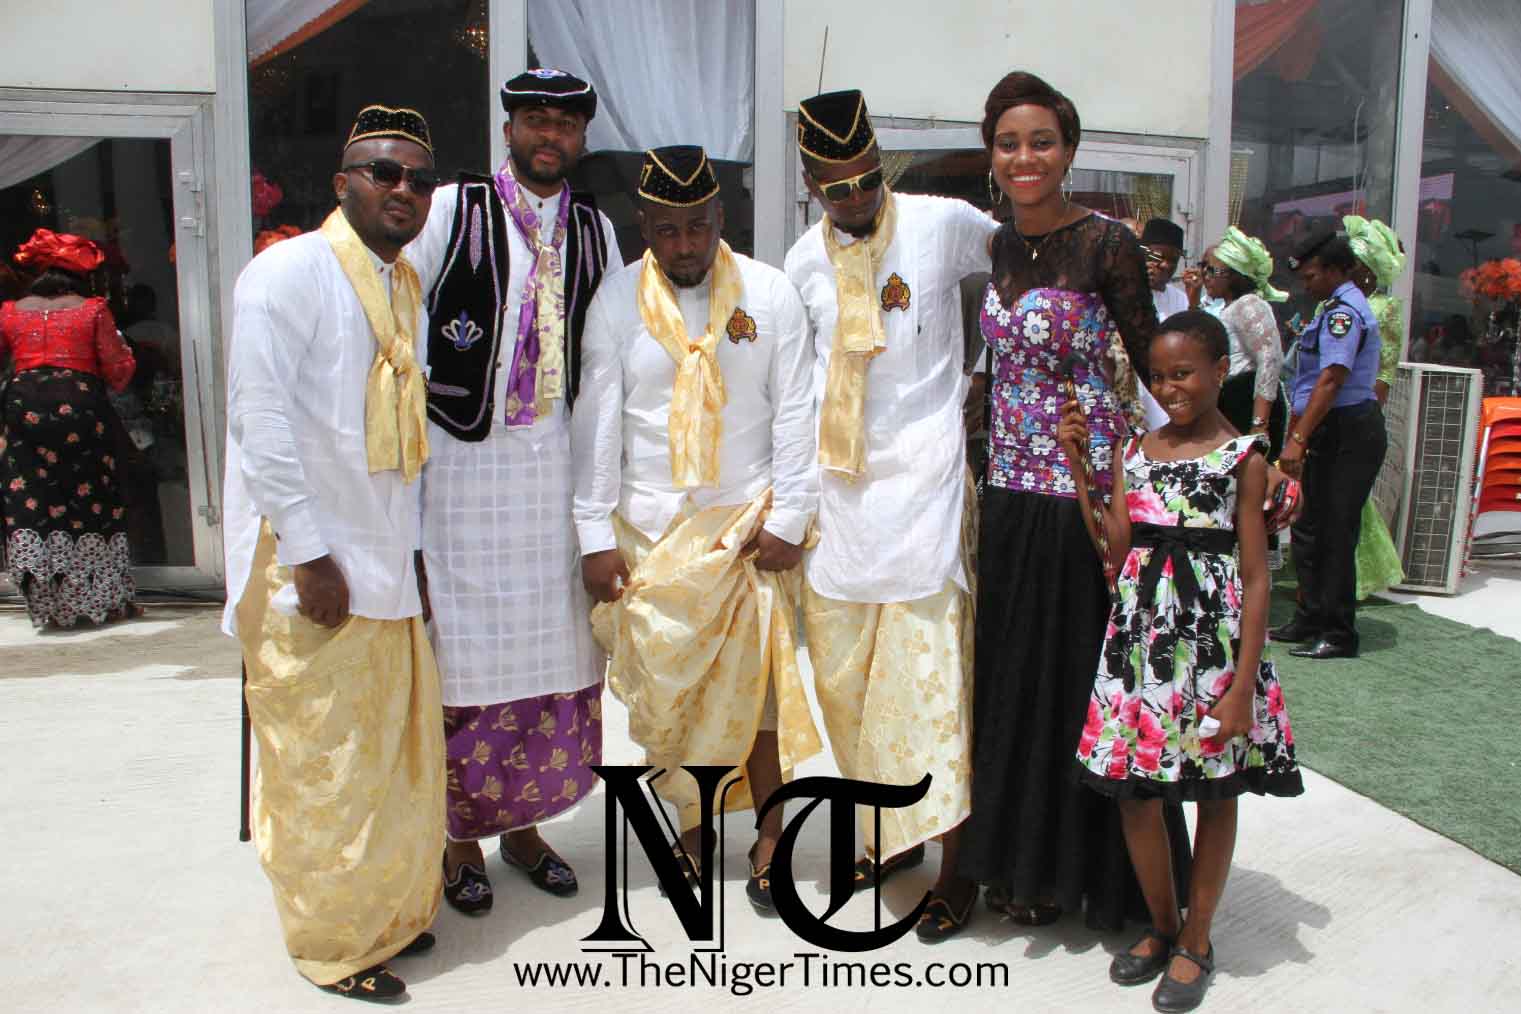 The-niger-times-godswill-faith-wedding-Traditional-Bayelsa-goddluck-15.jpg